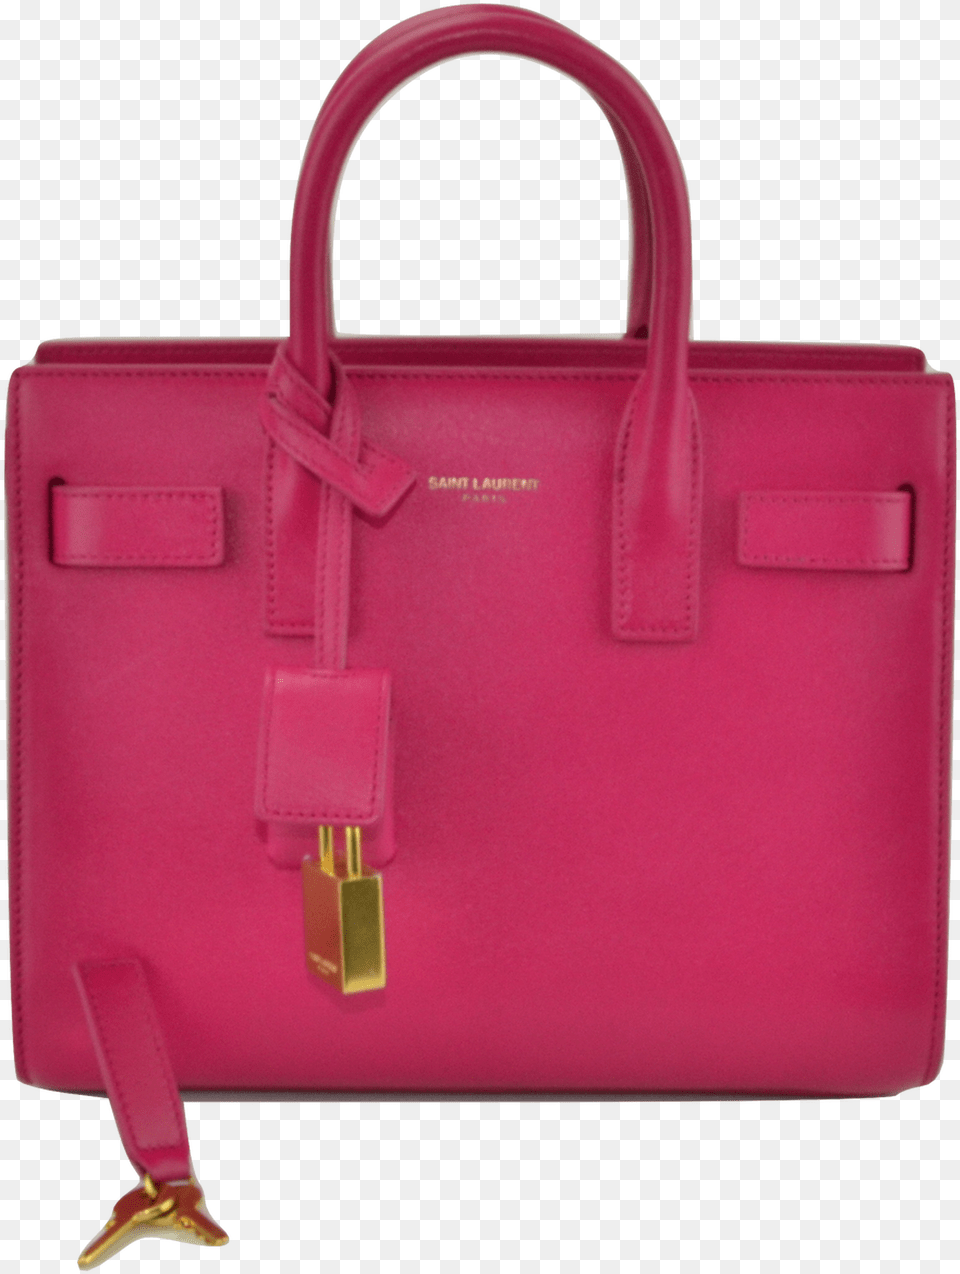 Transparent Yves Saint Laurent Logo Tote Bag, Accessories, Handbag, Briefcase, Purse Png Image